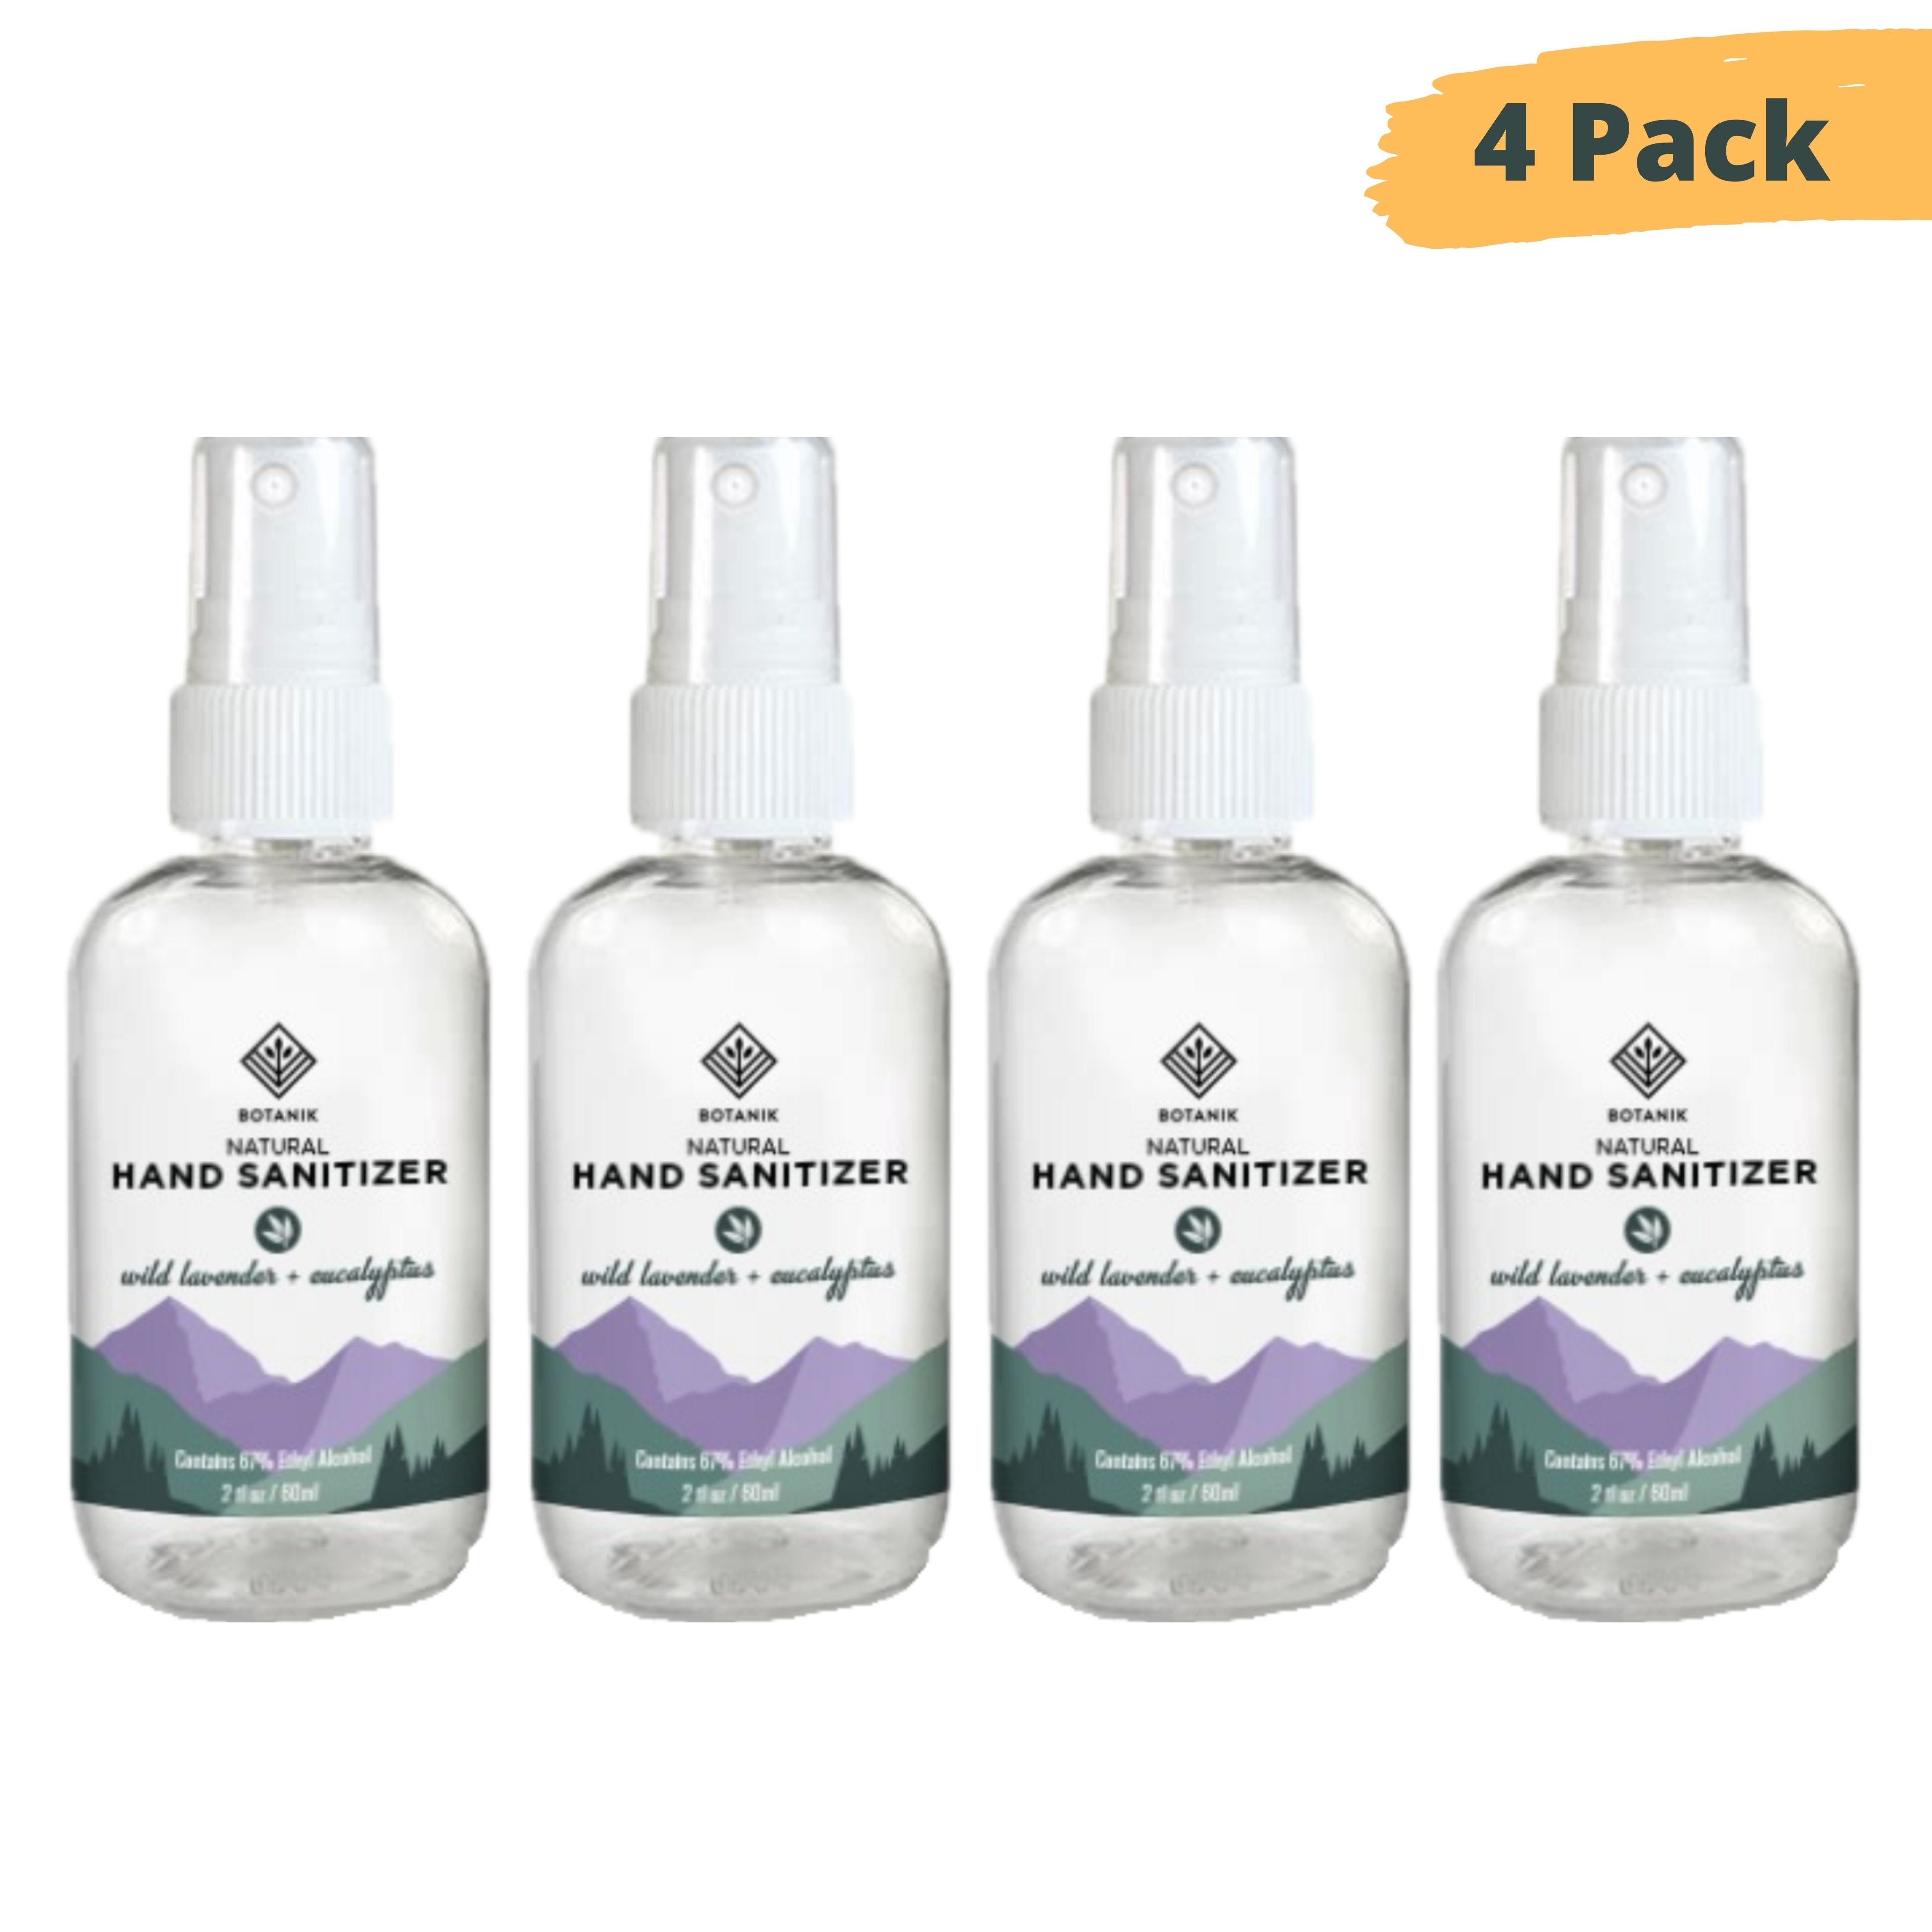 Natural Hand Sanitizer - Wild Lavender + Eucalyptus